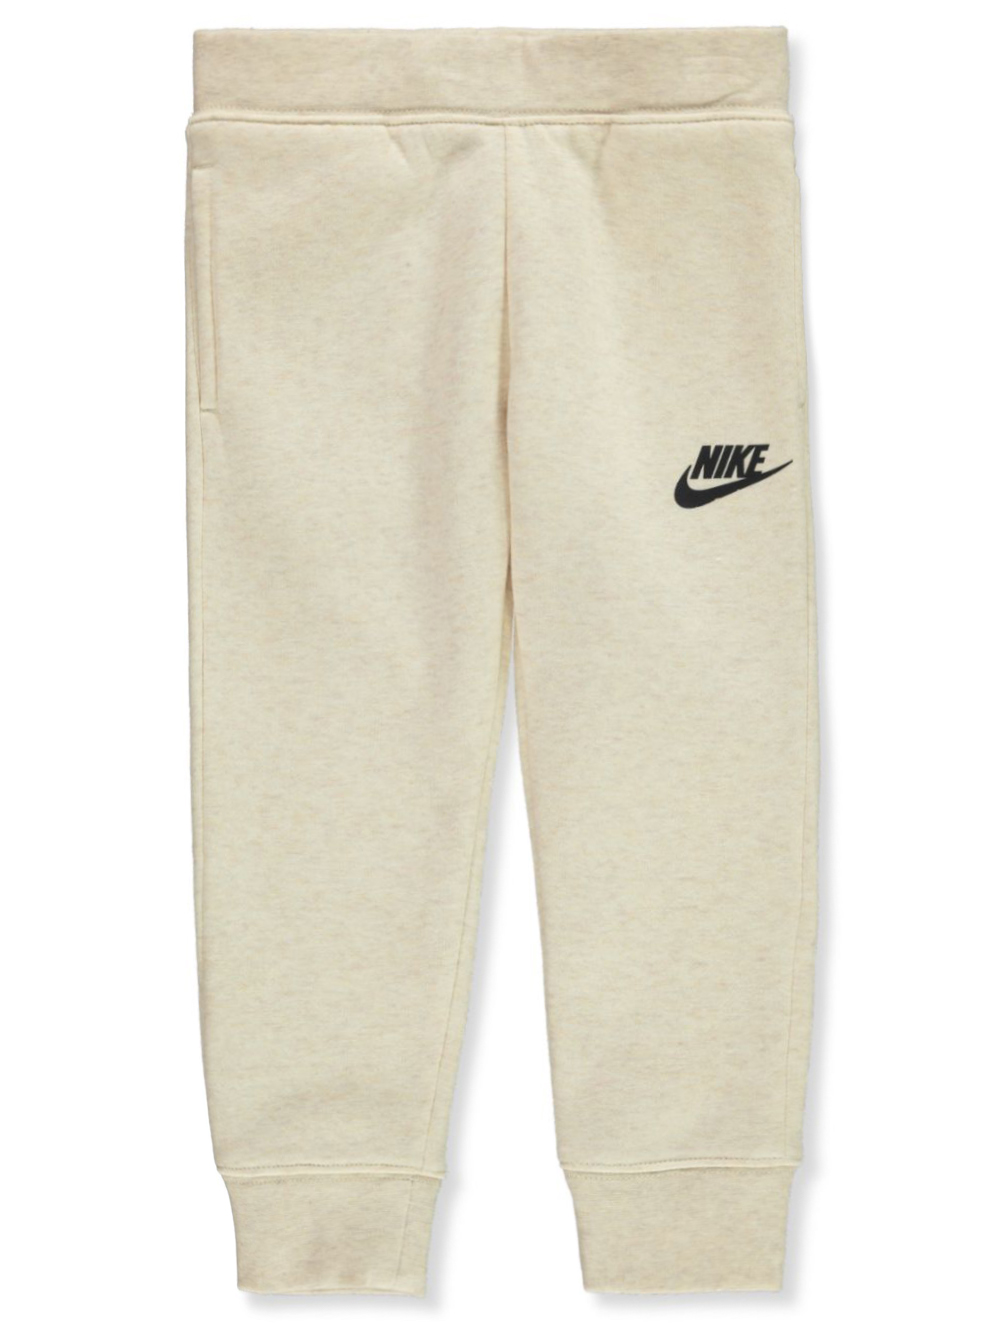 Nike Sportswear Rally Jogger Pants | Cute sweatpants outfit, Cute sweatpants,  Nike sweatpants girls